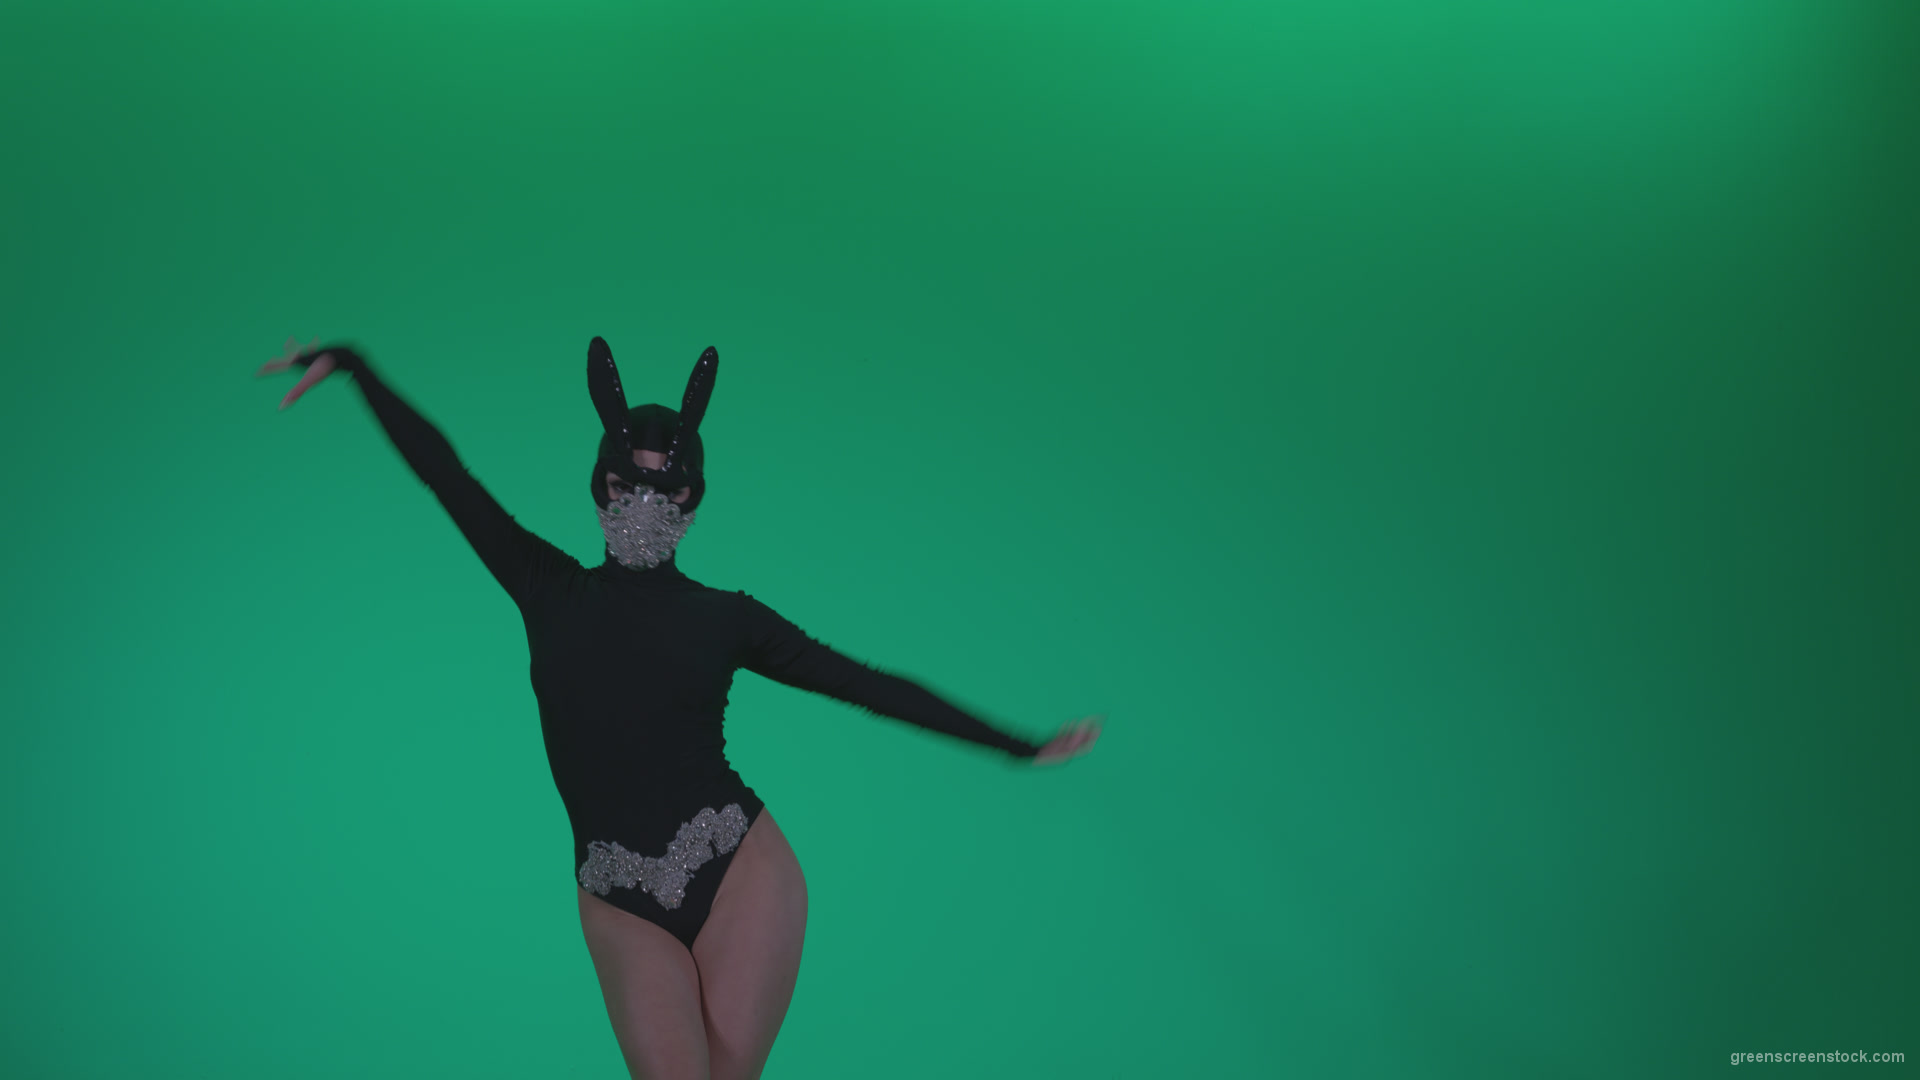 Go-go-Dancer-Black-Rabbit-u13-Green-Screen-Video-Footage_002 Green Screen Stock